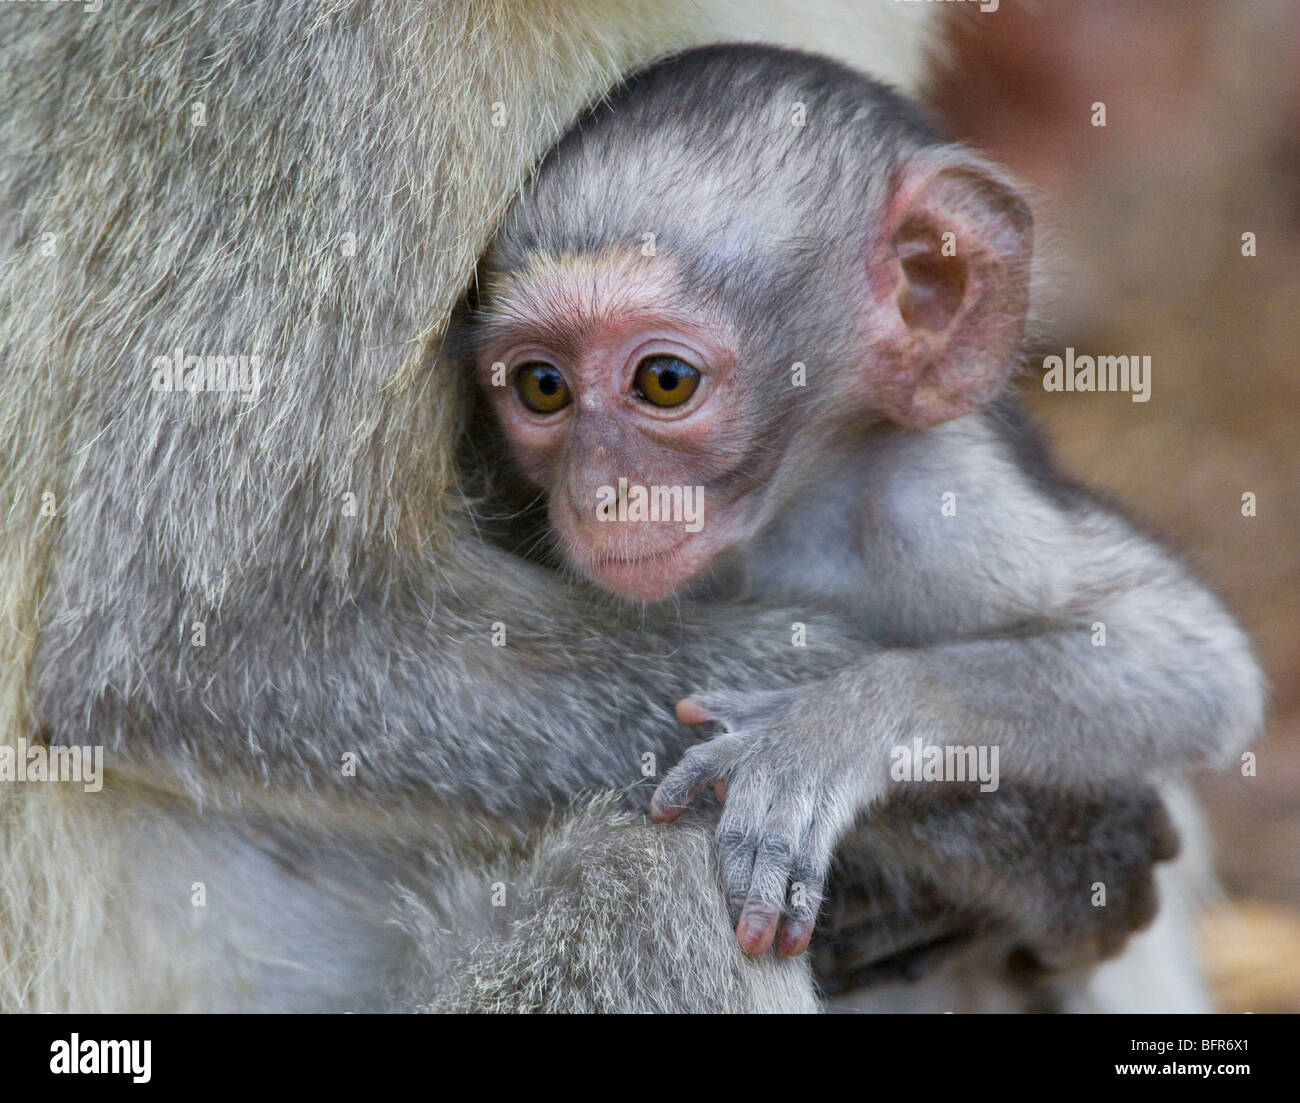 Vervet monkey baby clinging onto its mother Stock Photo